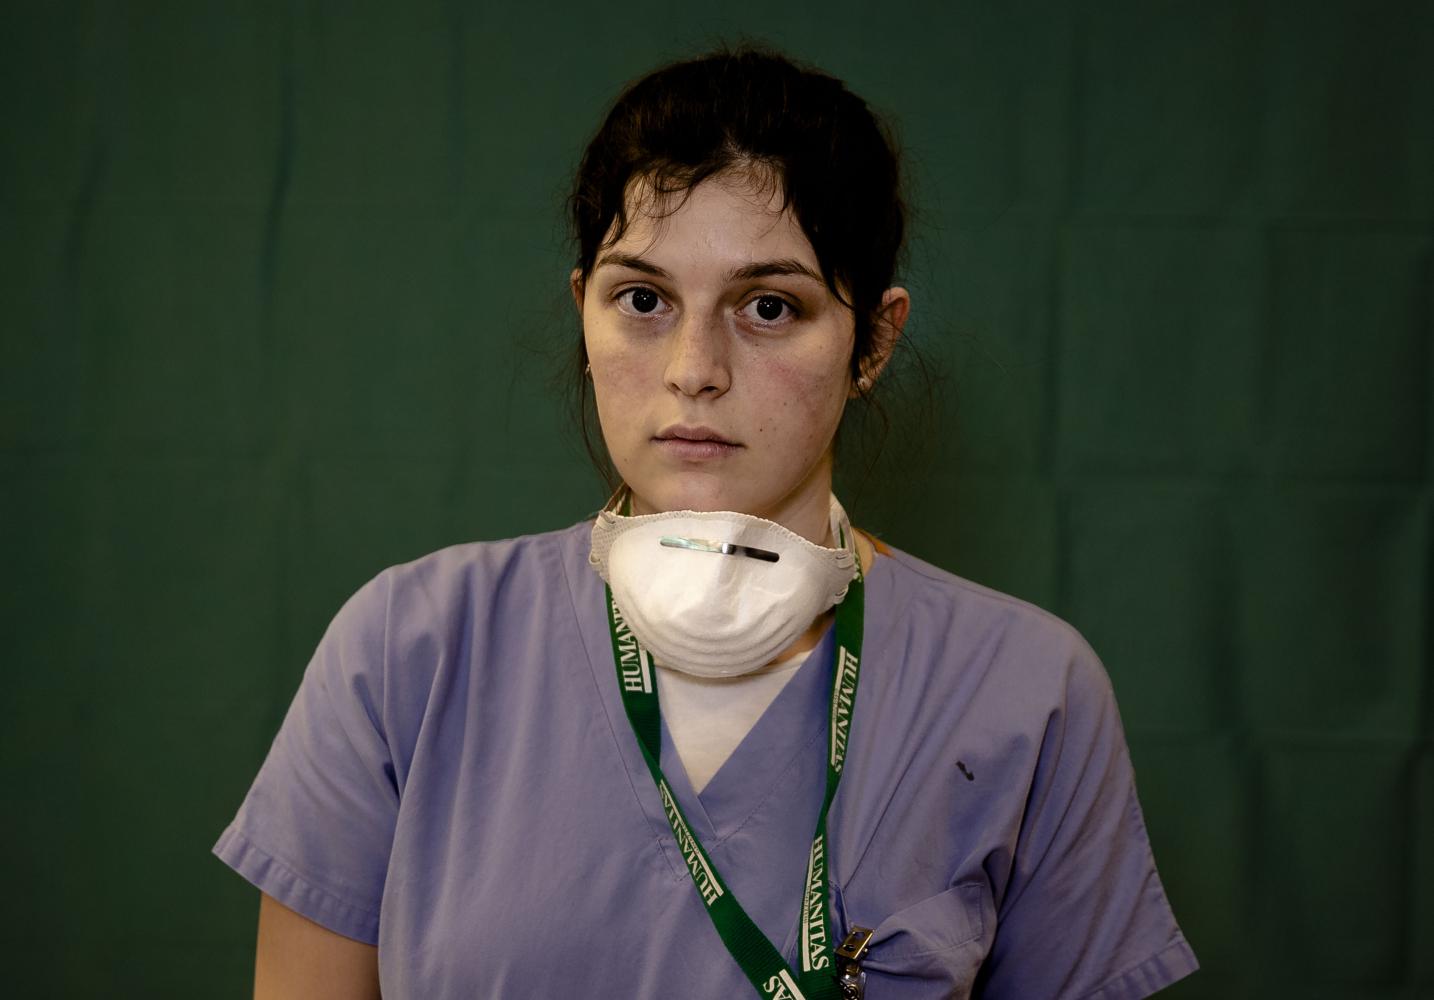 Lucia Perolari, 24, Krankenschwester im italienischen Krankenhaus "Humanitas Gavazzeni" in Bergamo